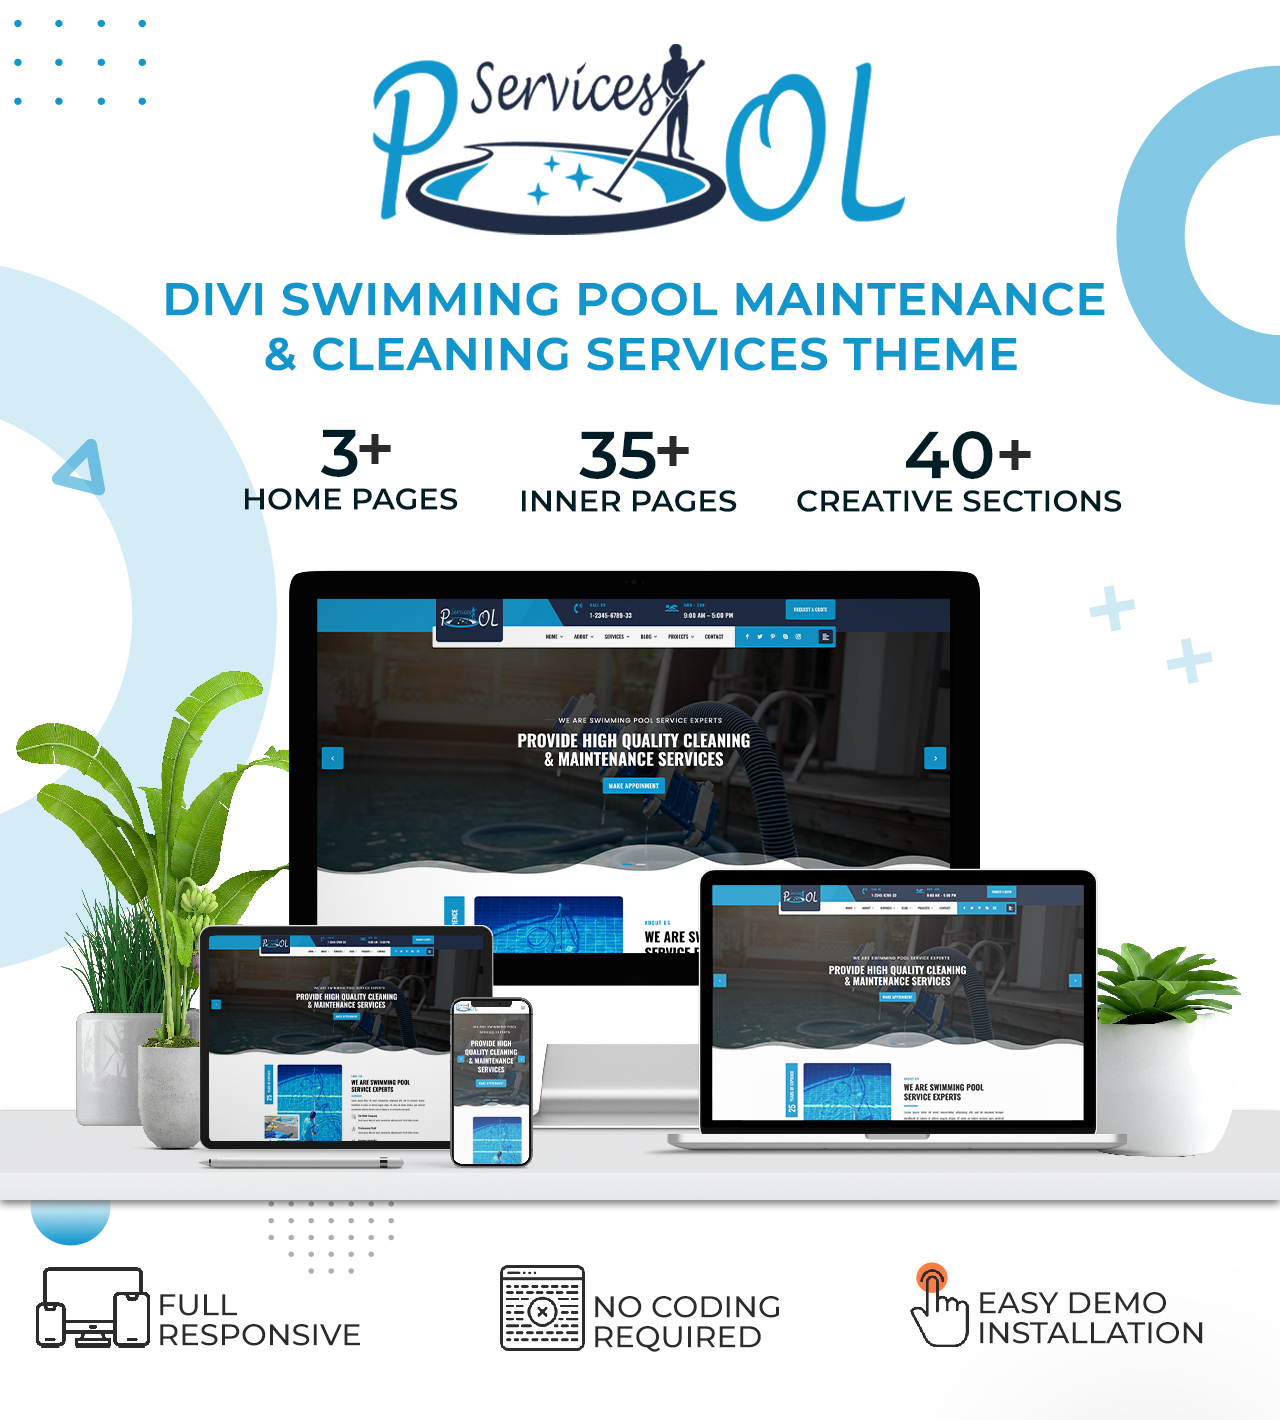 Divi Swimming Pool Service & Maintenance Theme